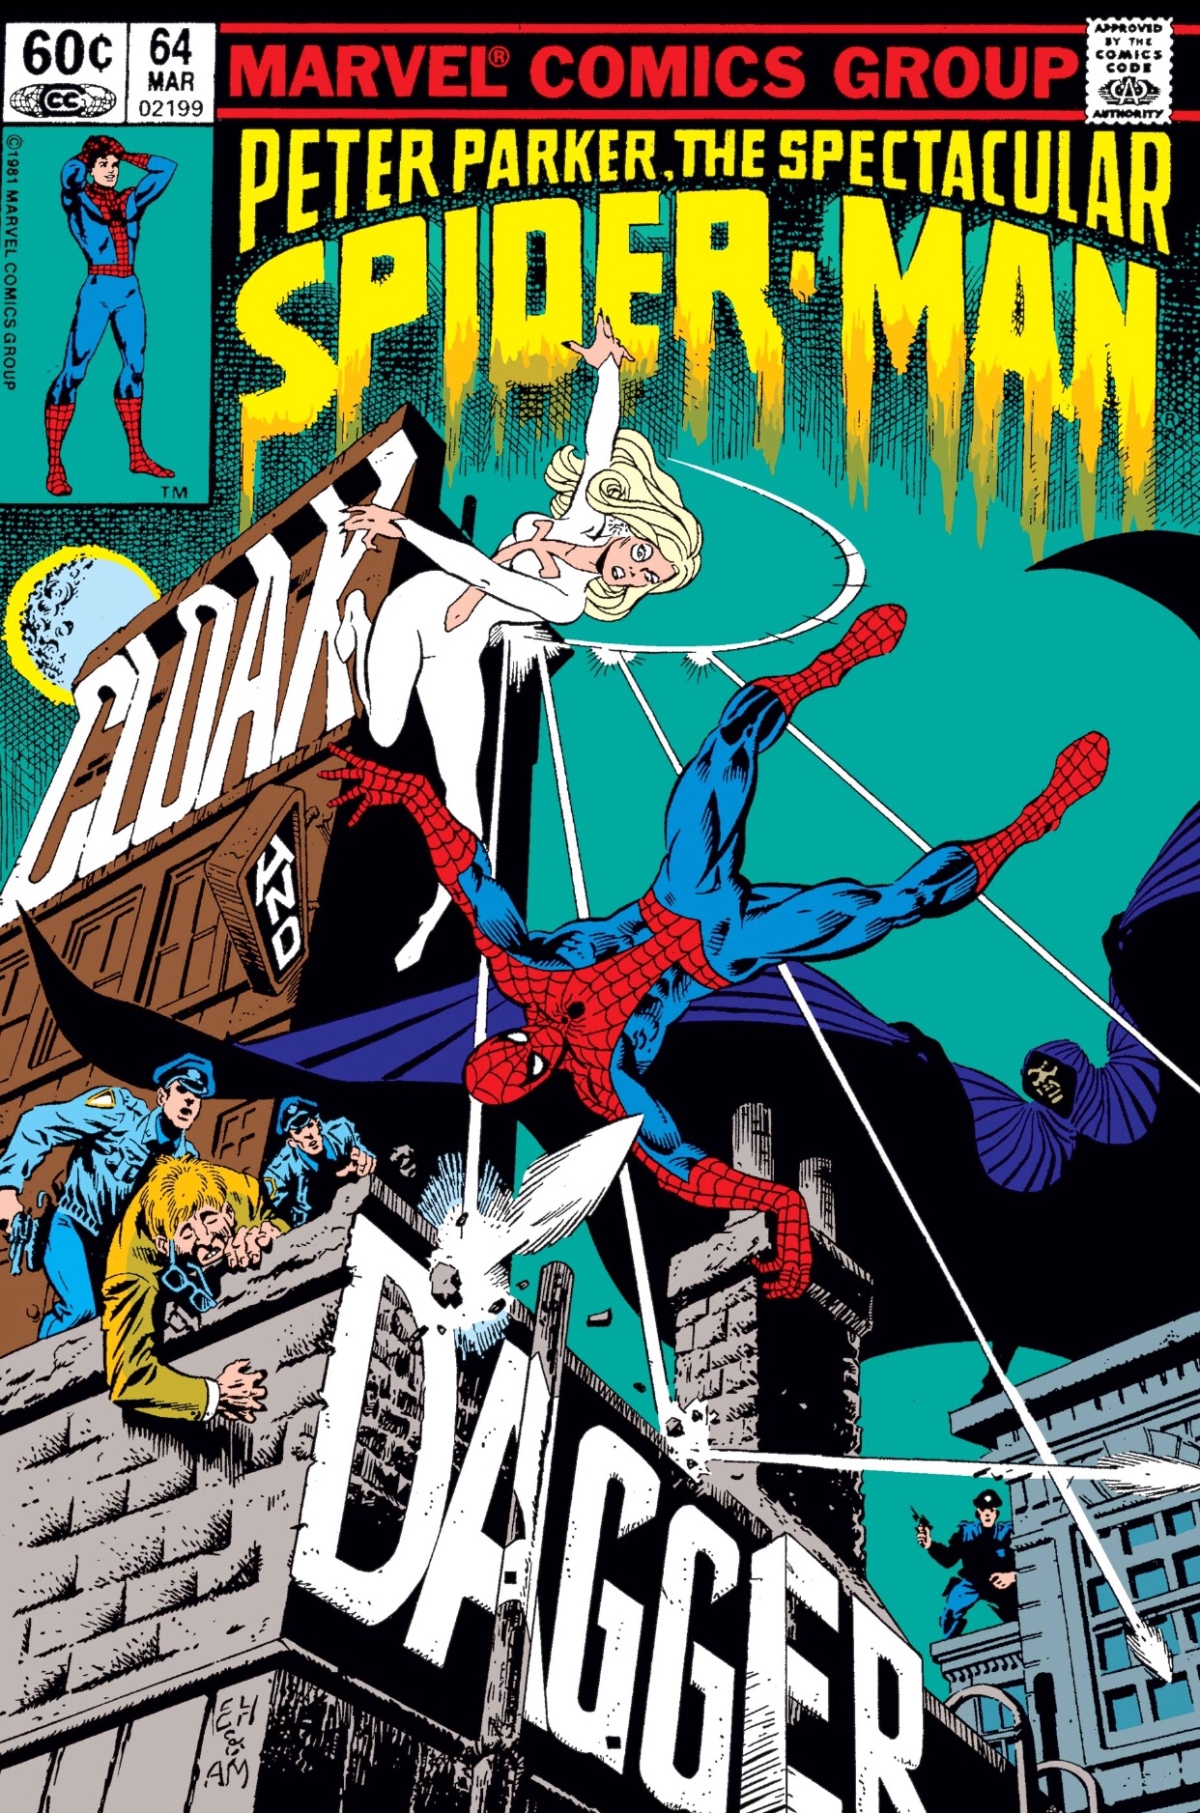 The Spectacular Spider-Man vs. Cloak & Dagger ✨